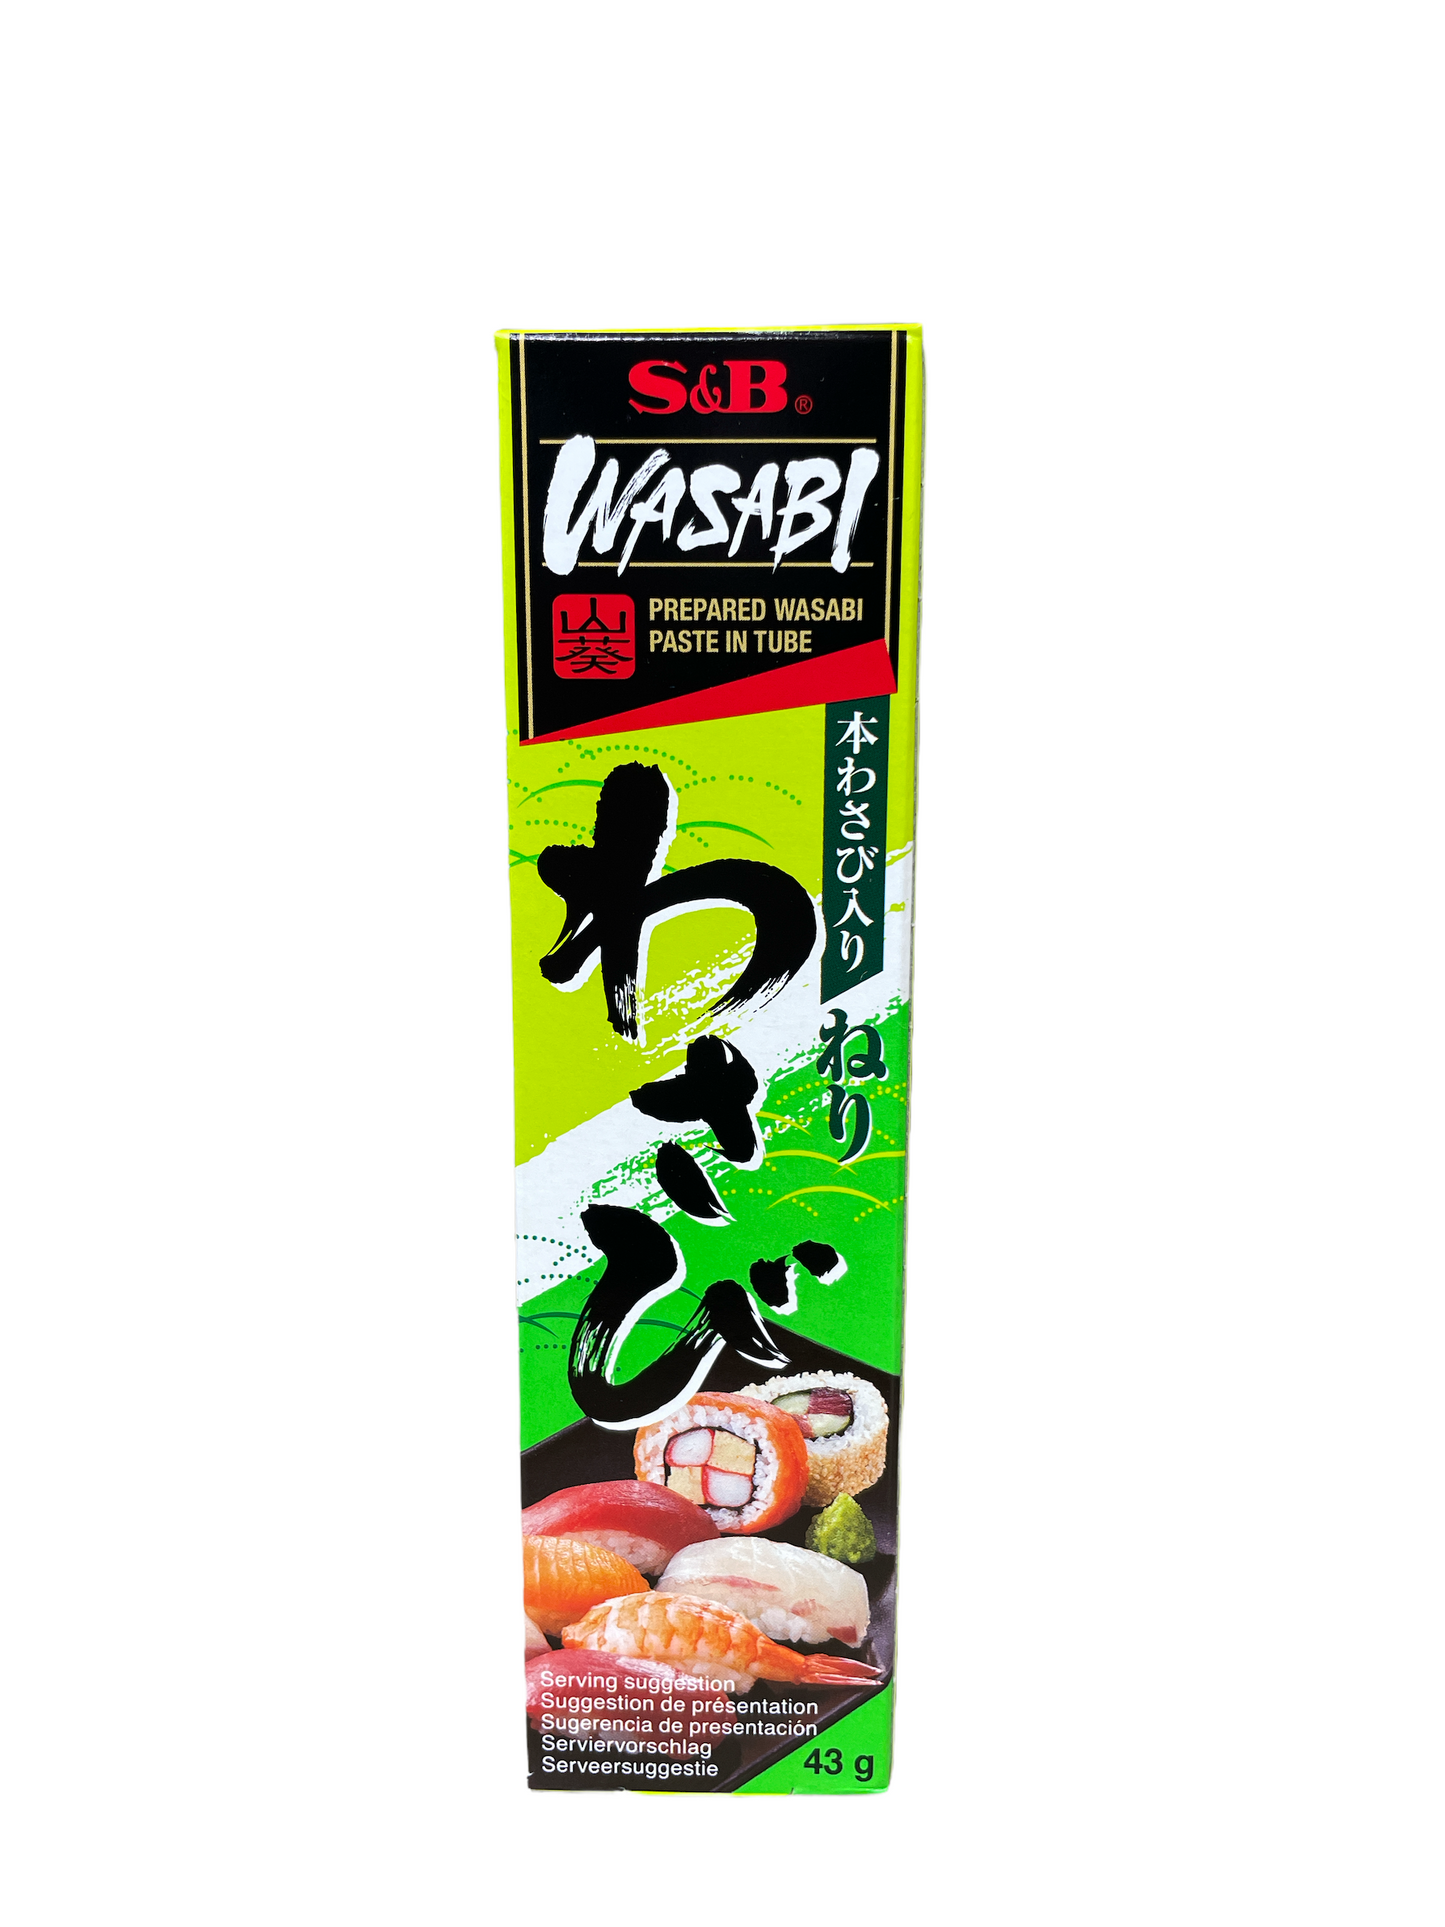 S&B Wasabi Paste 43g 芥末醬